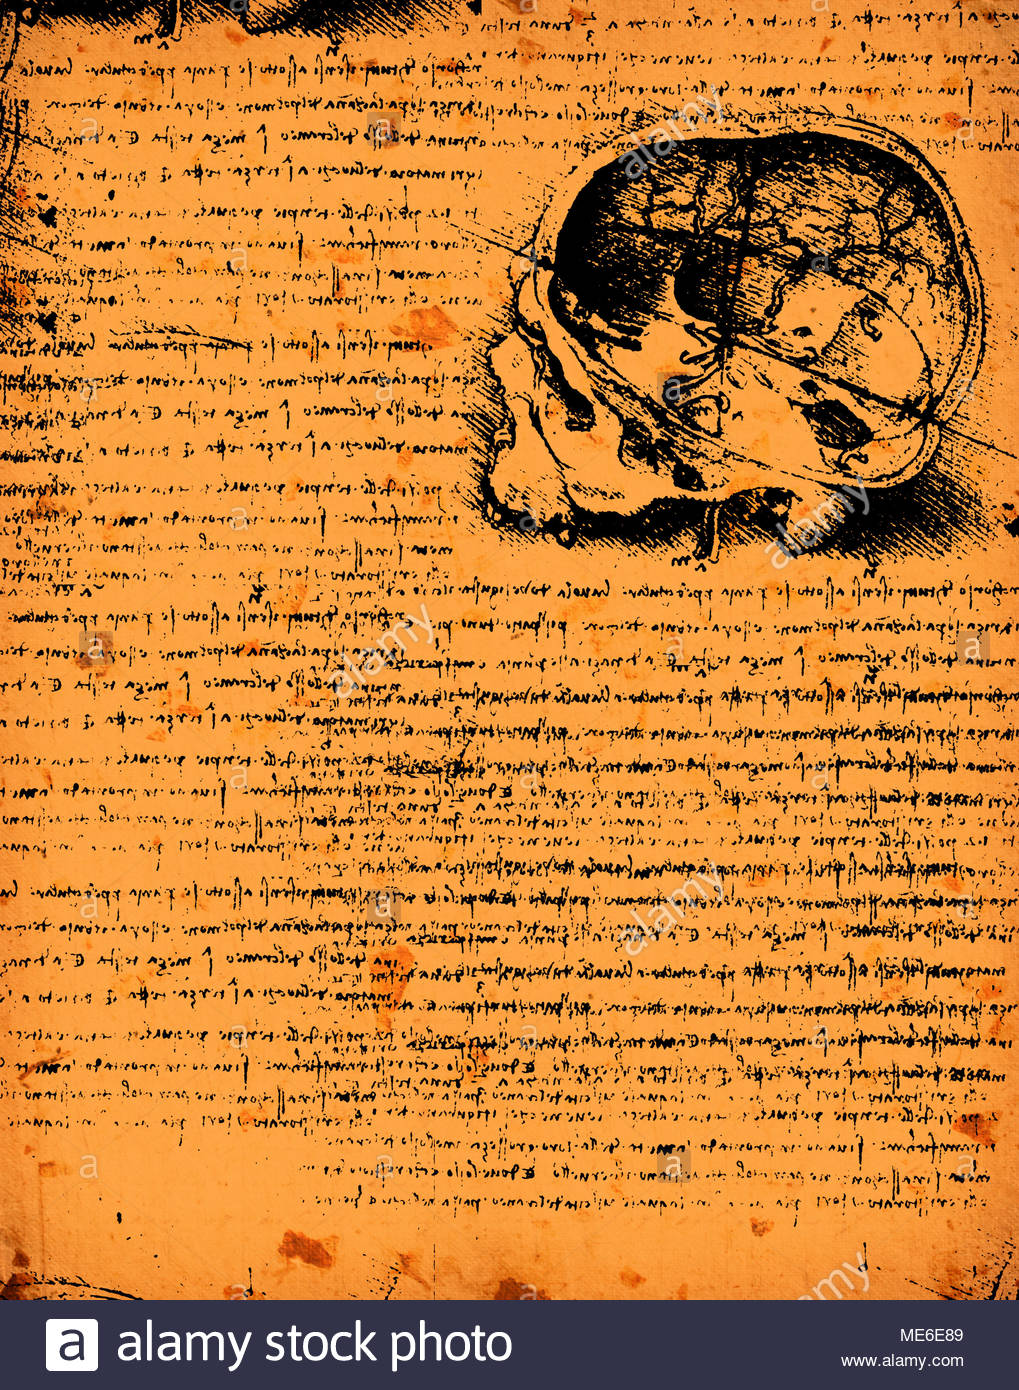 Anatomy Art By Leonardo Da Vinci From On Textured Background